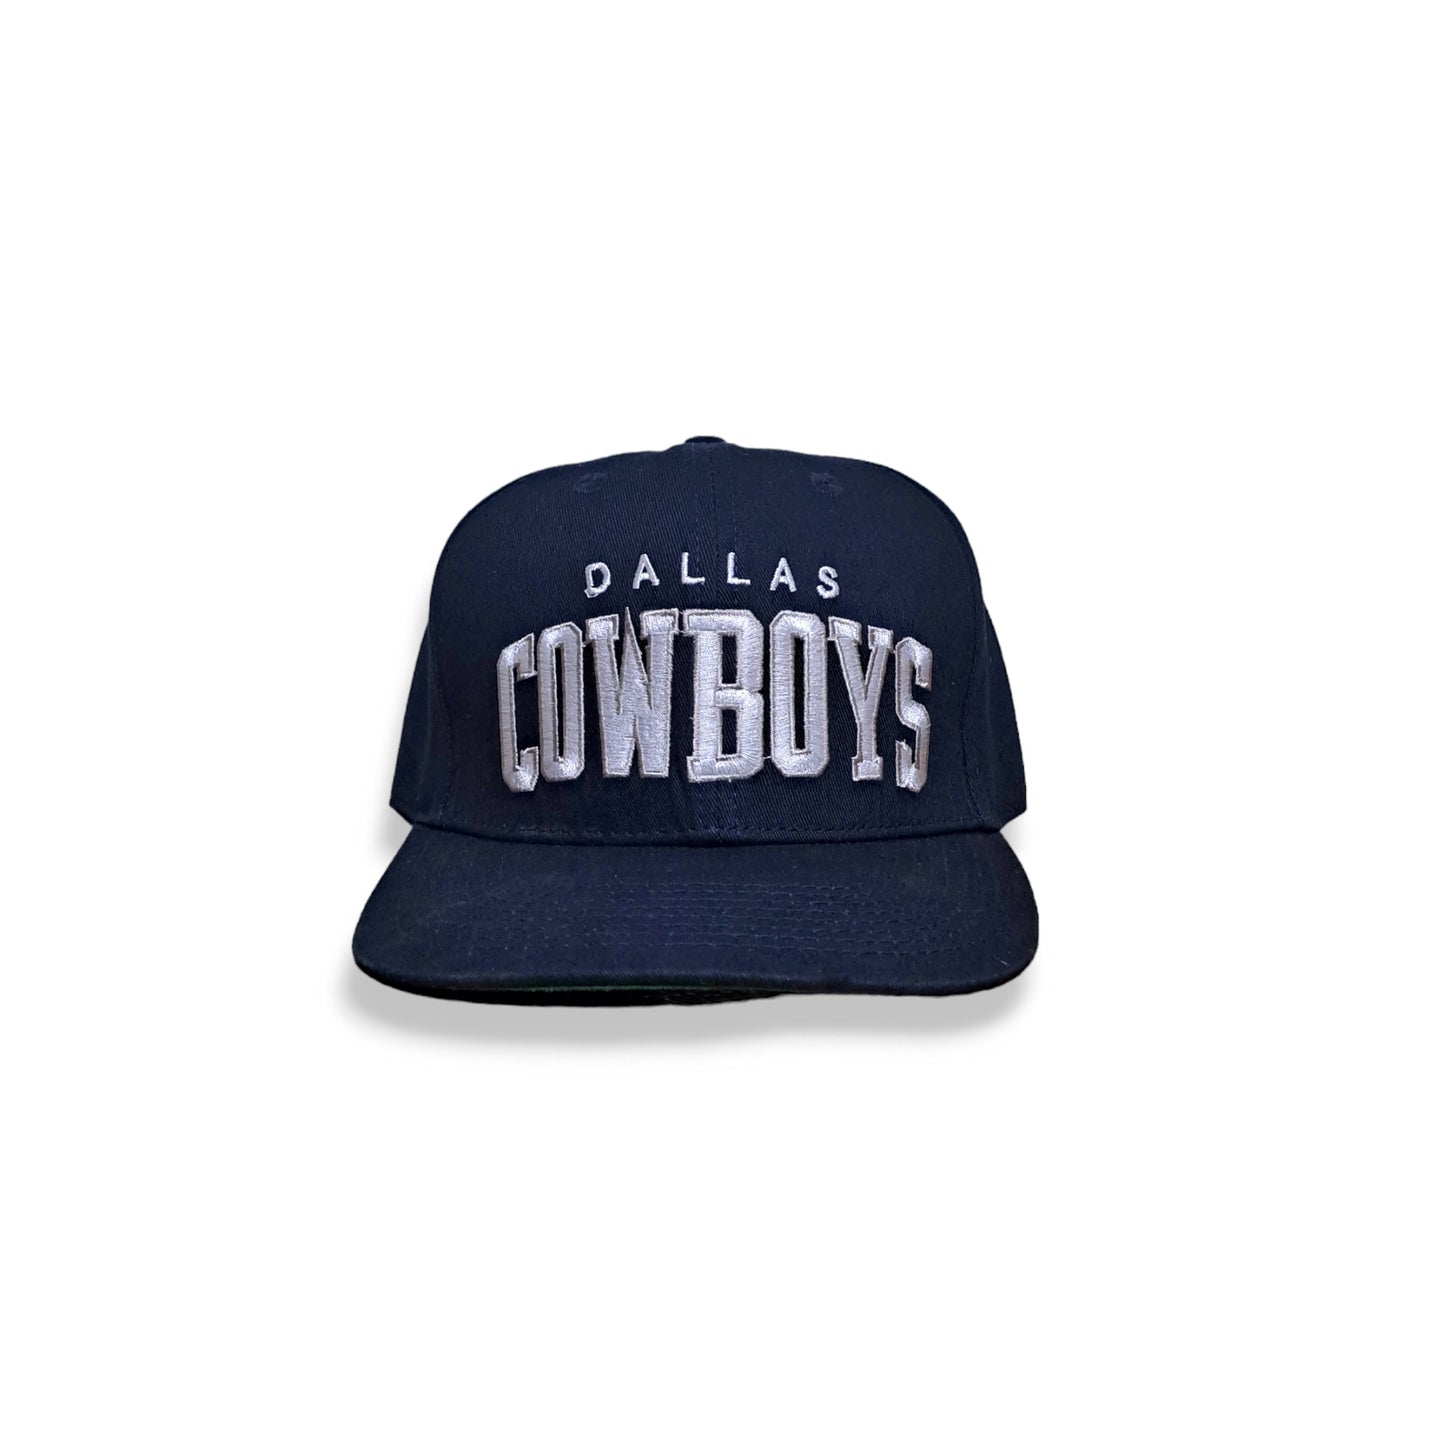 SOLD OUT | Dallas Cowboys Cap